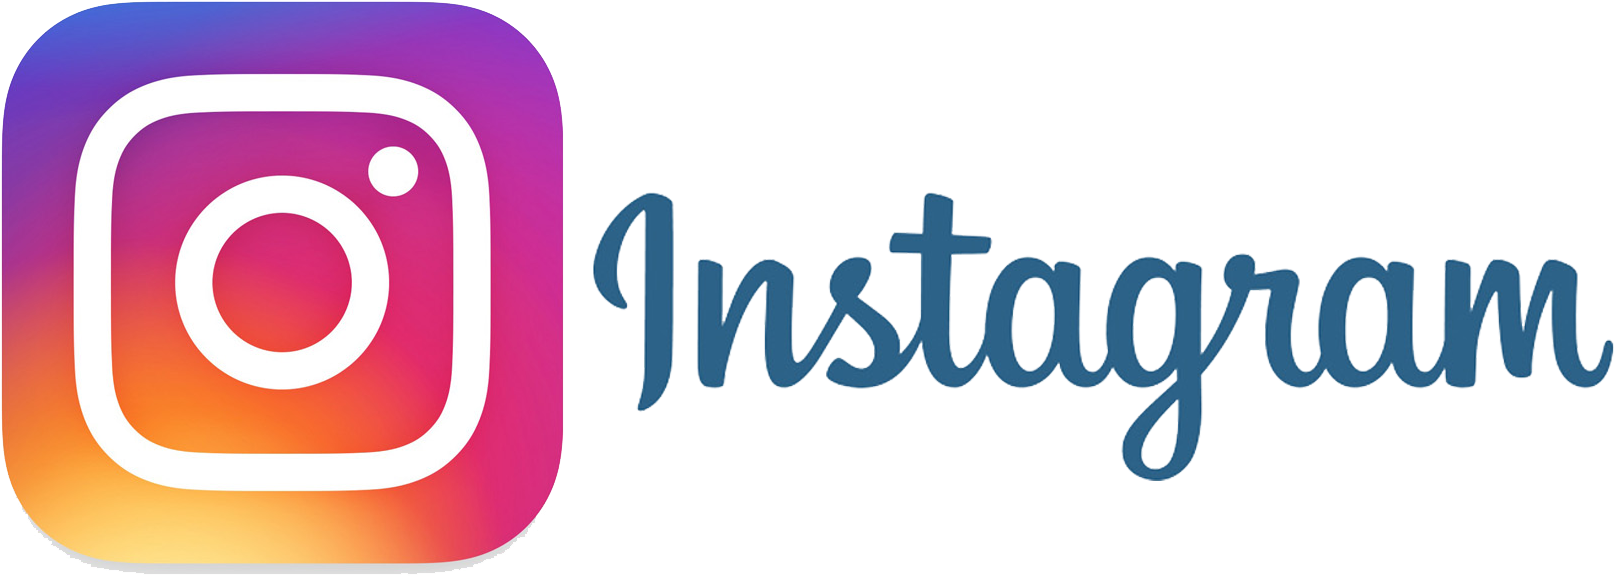 <img src="https://www.pinclipart.com/picdir/middle/59-590993_follow-us-on-instagram-logo-png-clipart.png" alt="Follow Us On Instagram Logo Png Clipart@pinclipart.com">